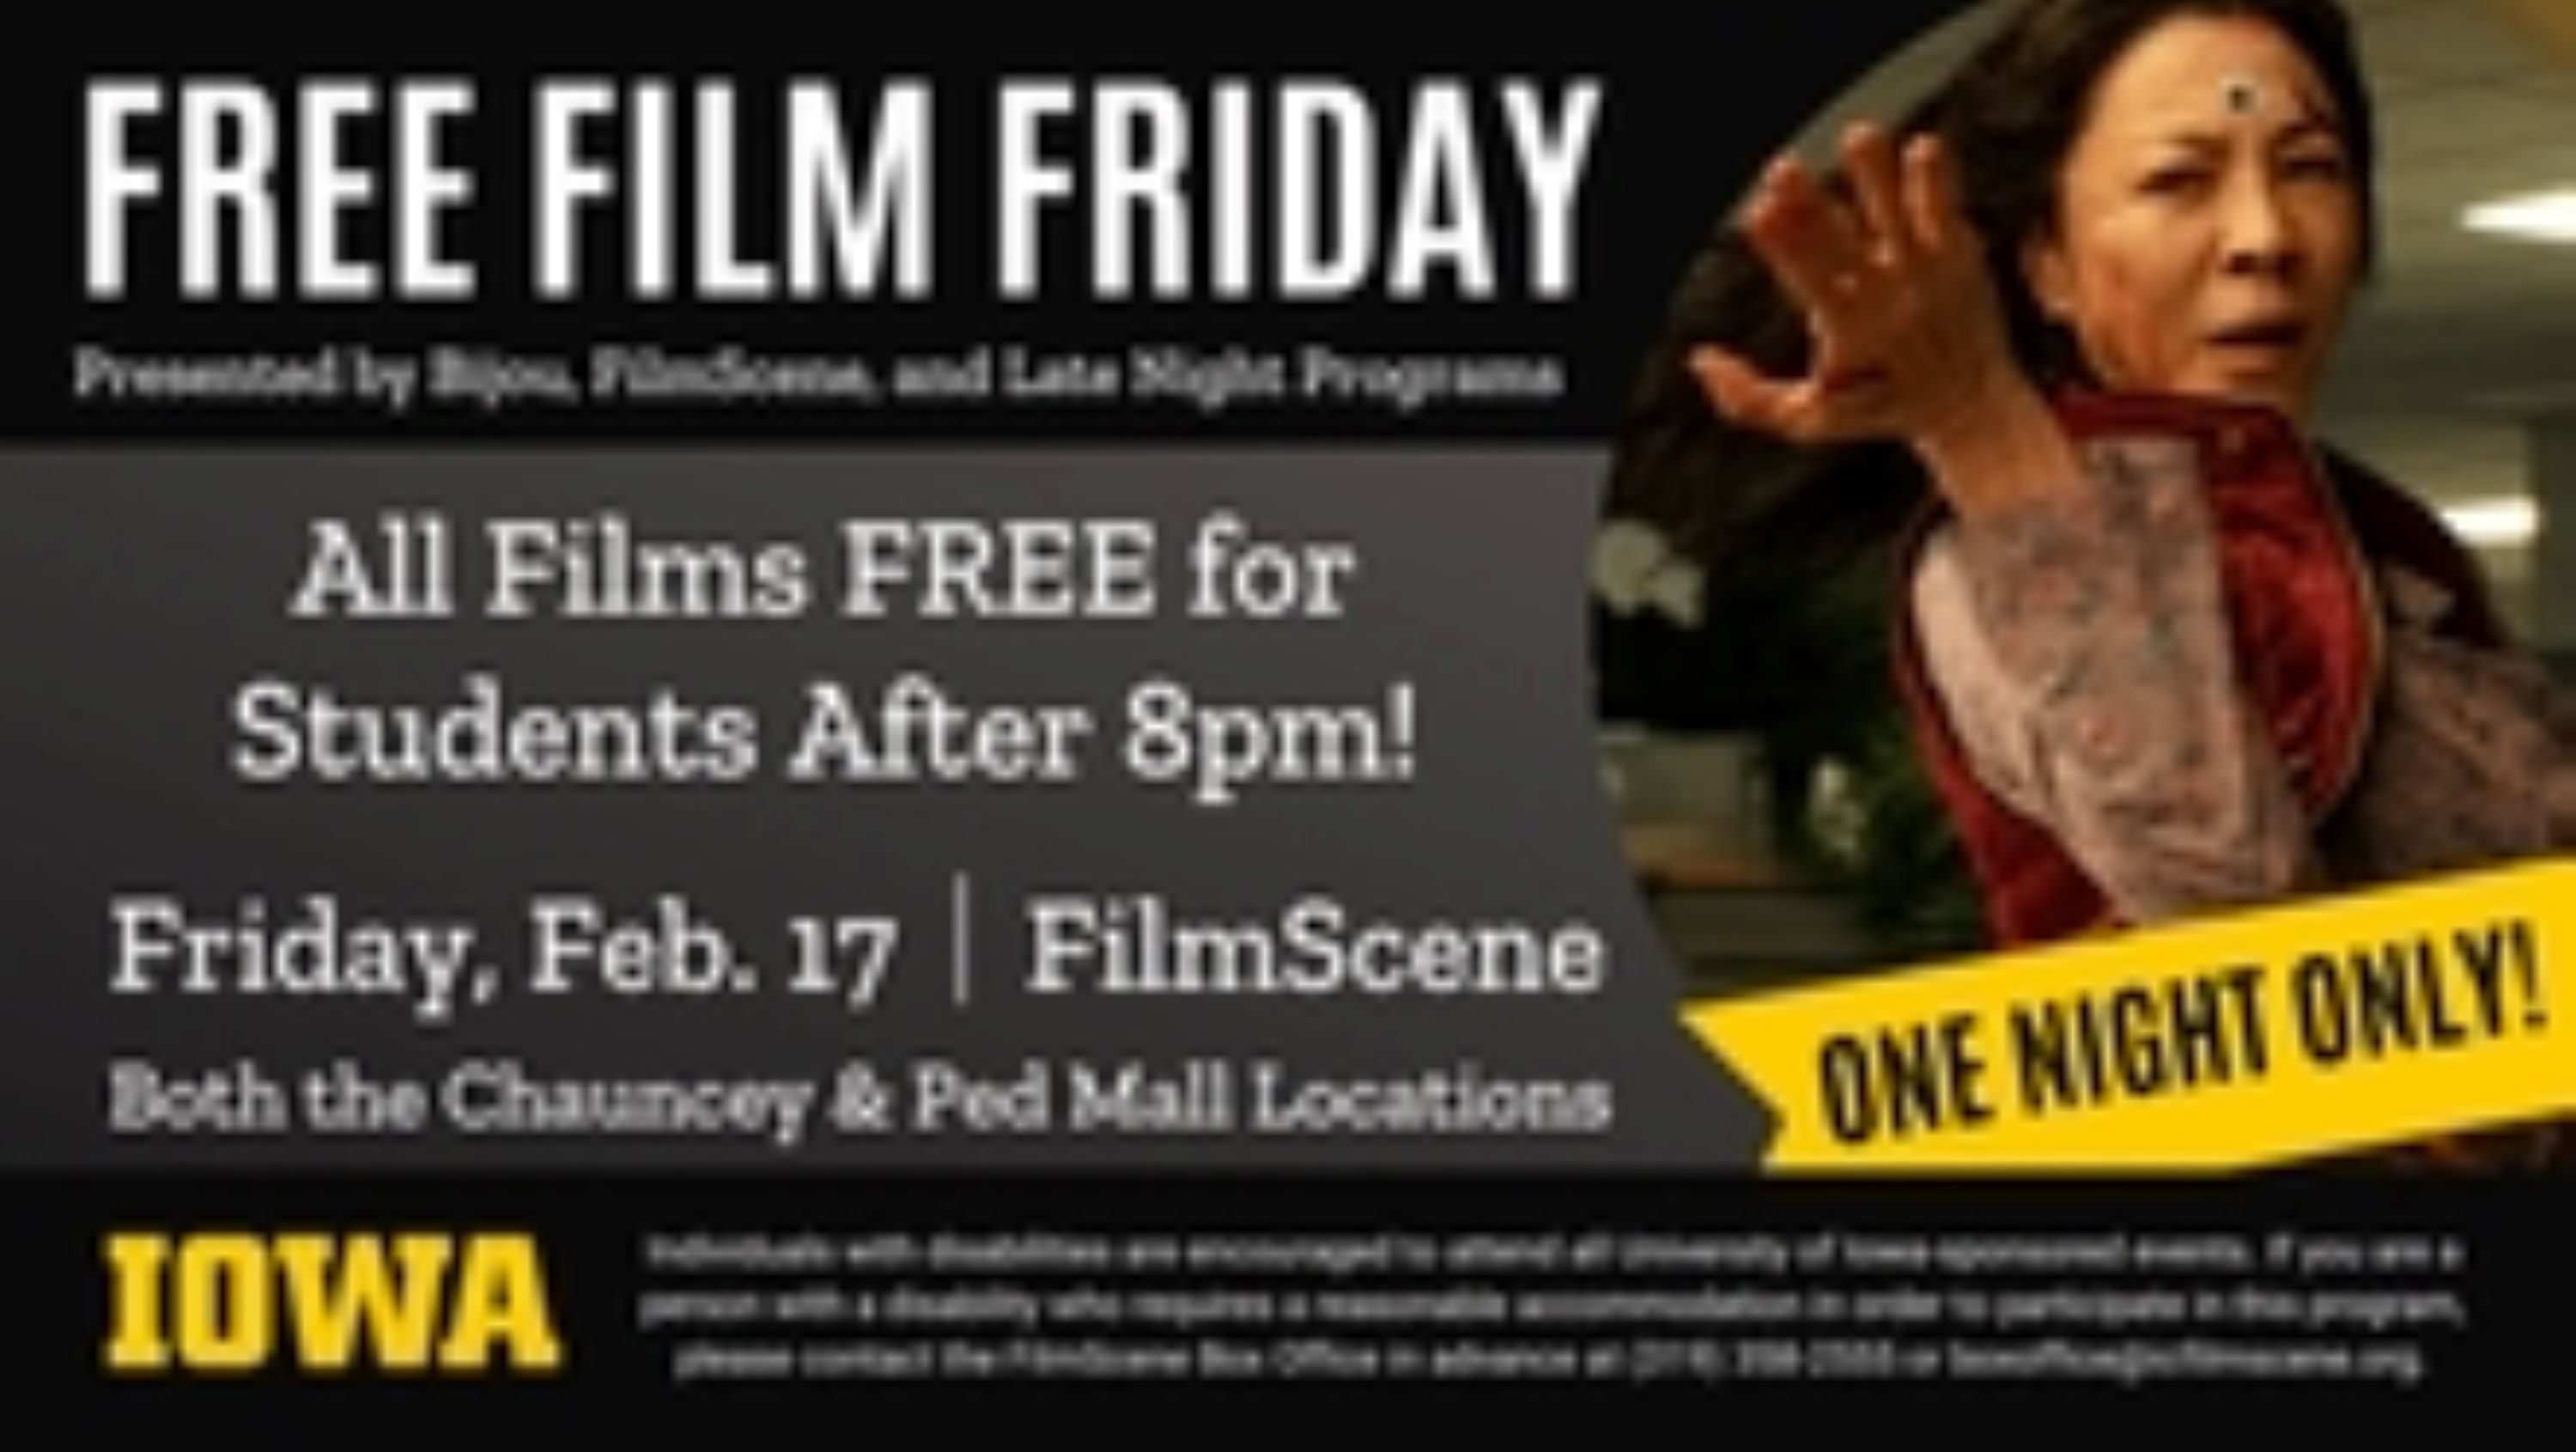 Free film Friday